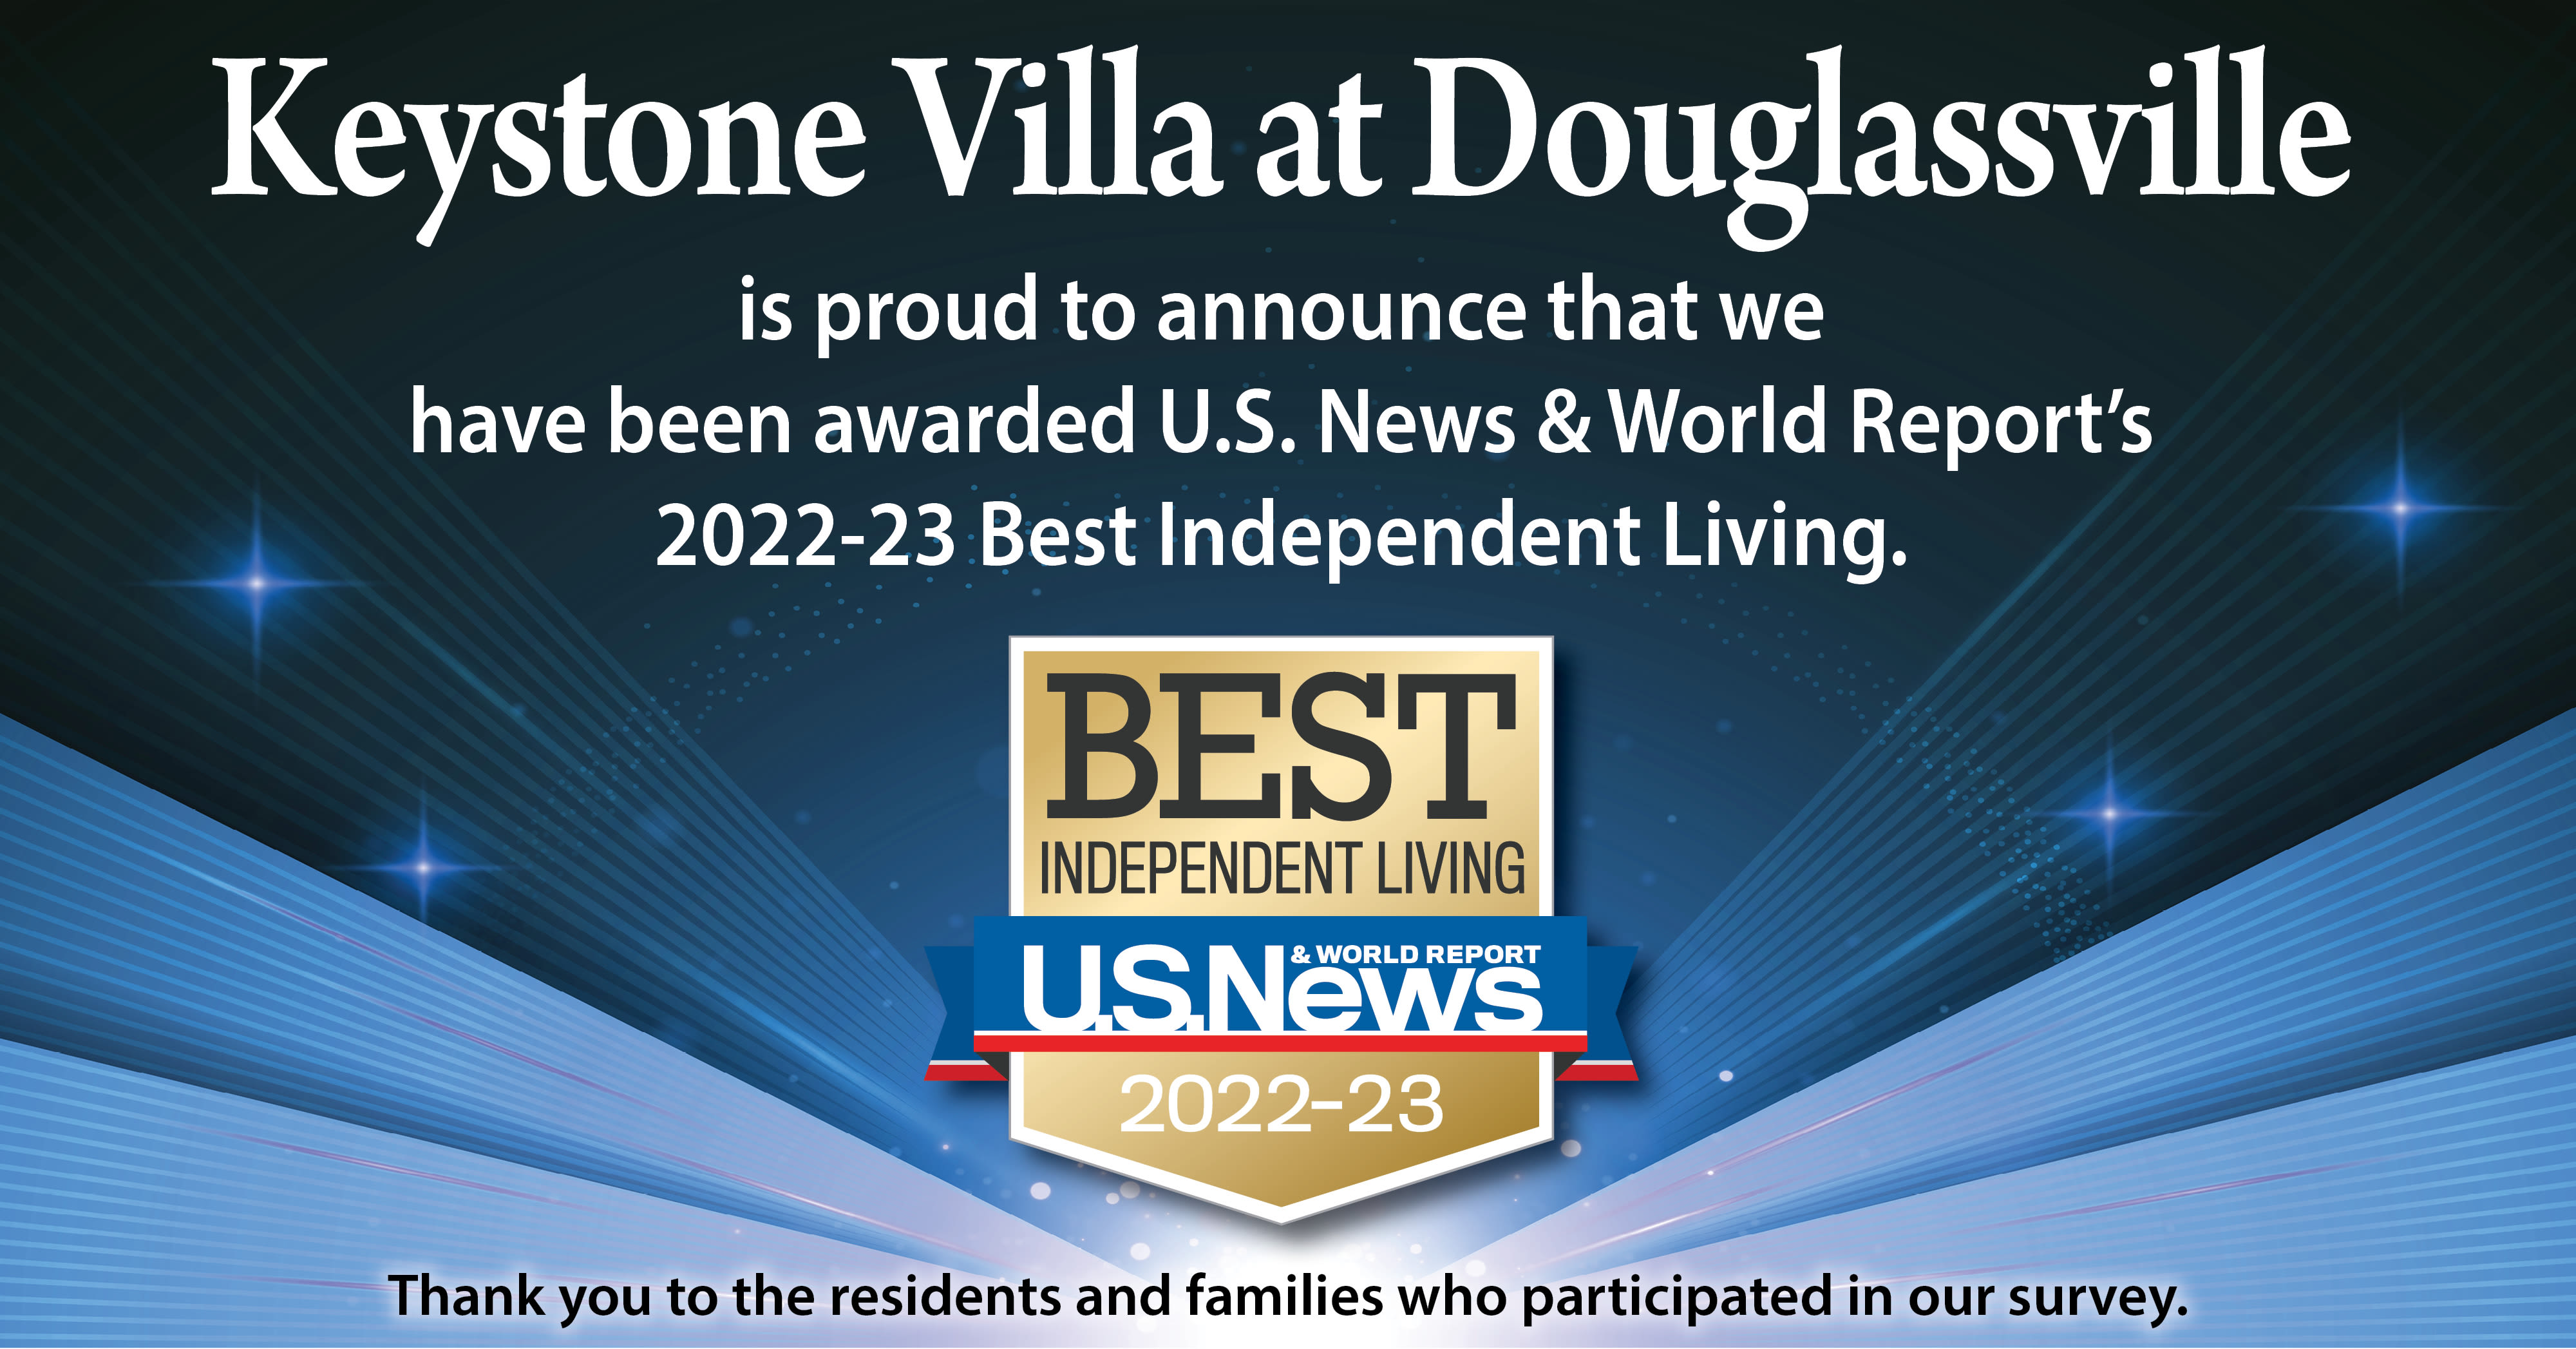 US News Best Senior Living Award 2022 for Keystone Villa at Douglassville